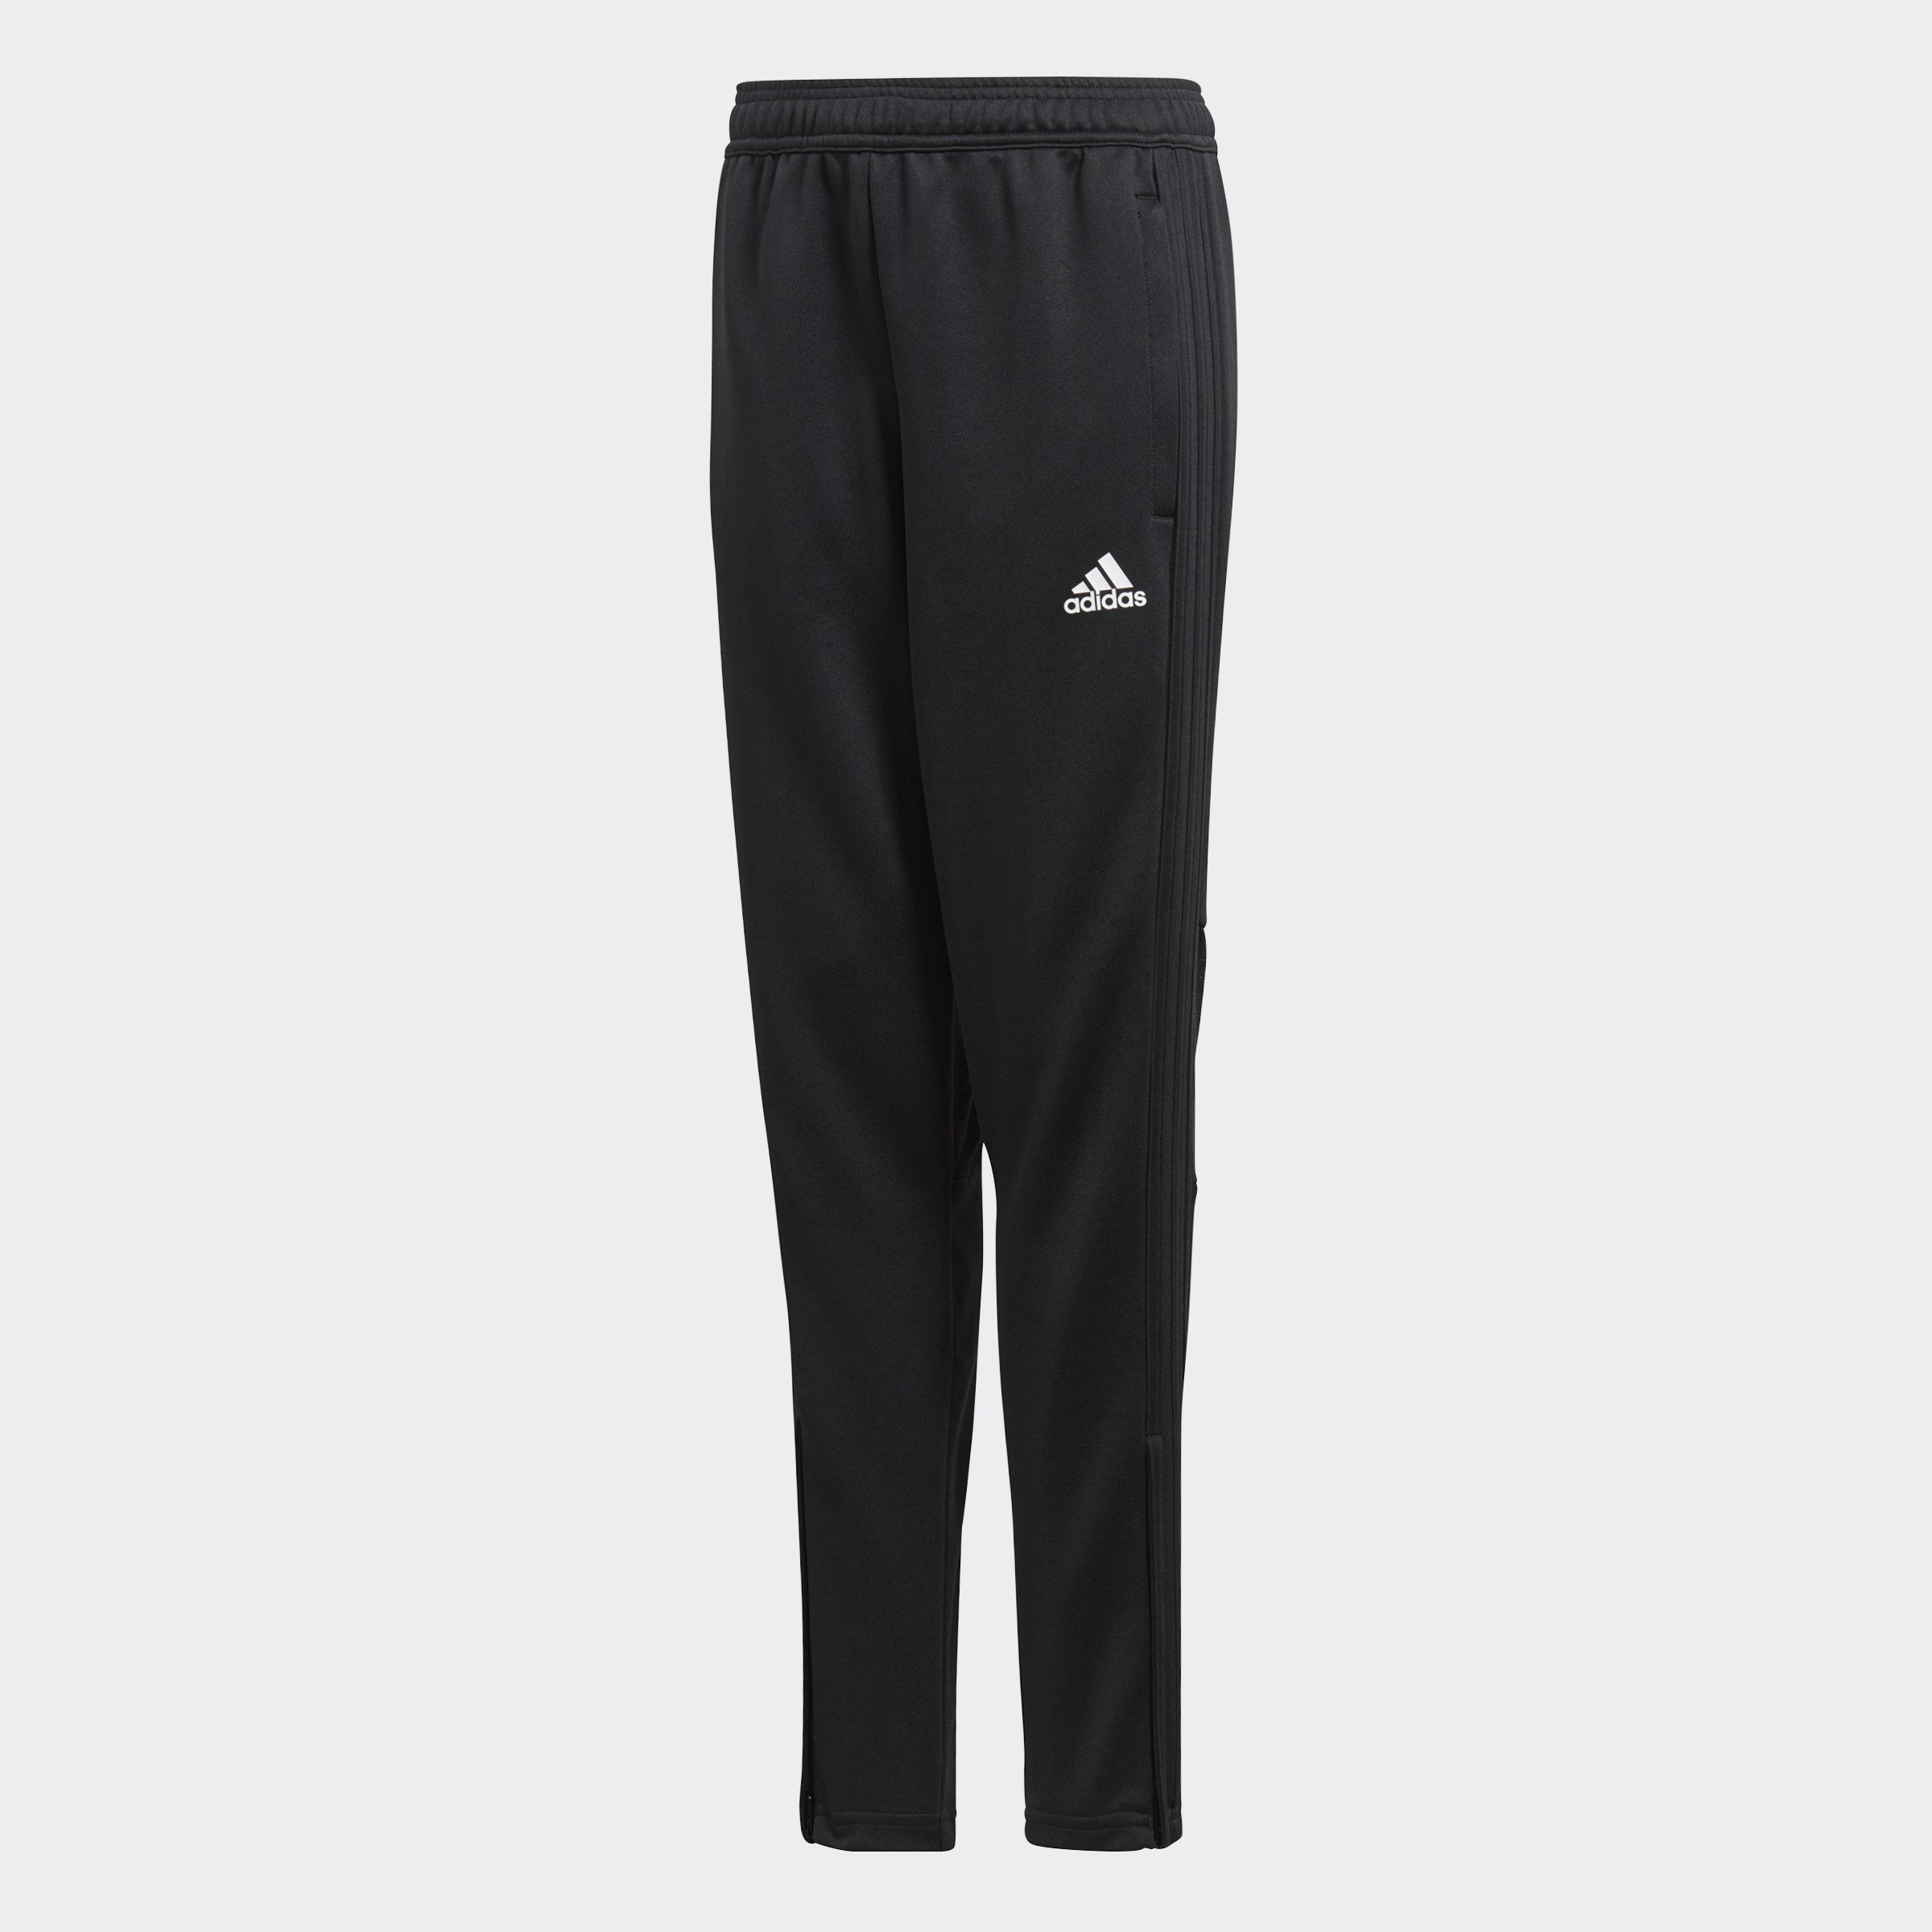 adidas | Bottoms | Adidas Boys Tapered Trainer Climacool Pants Size Youth  Xlarge | Poshmark